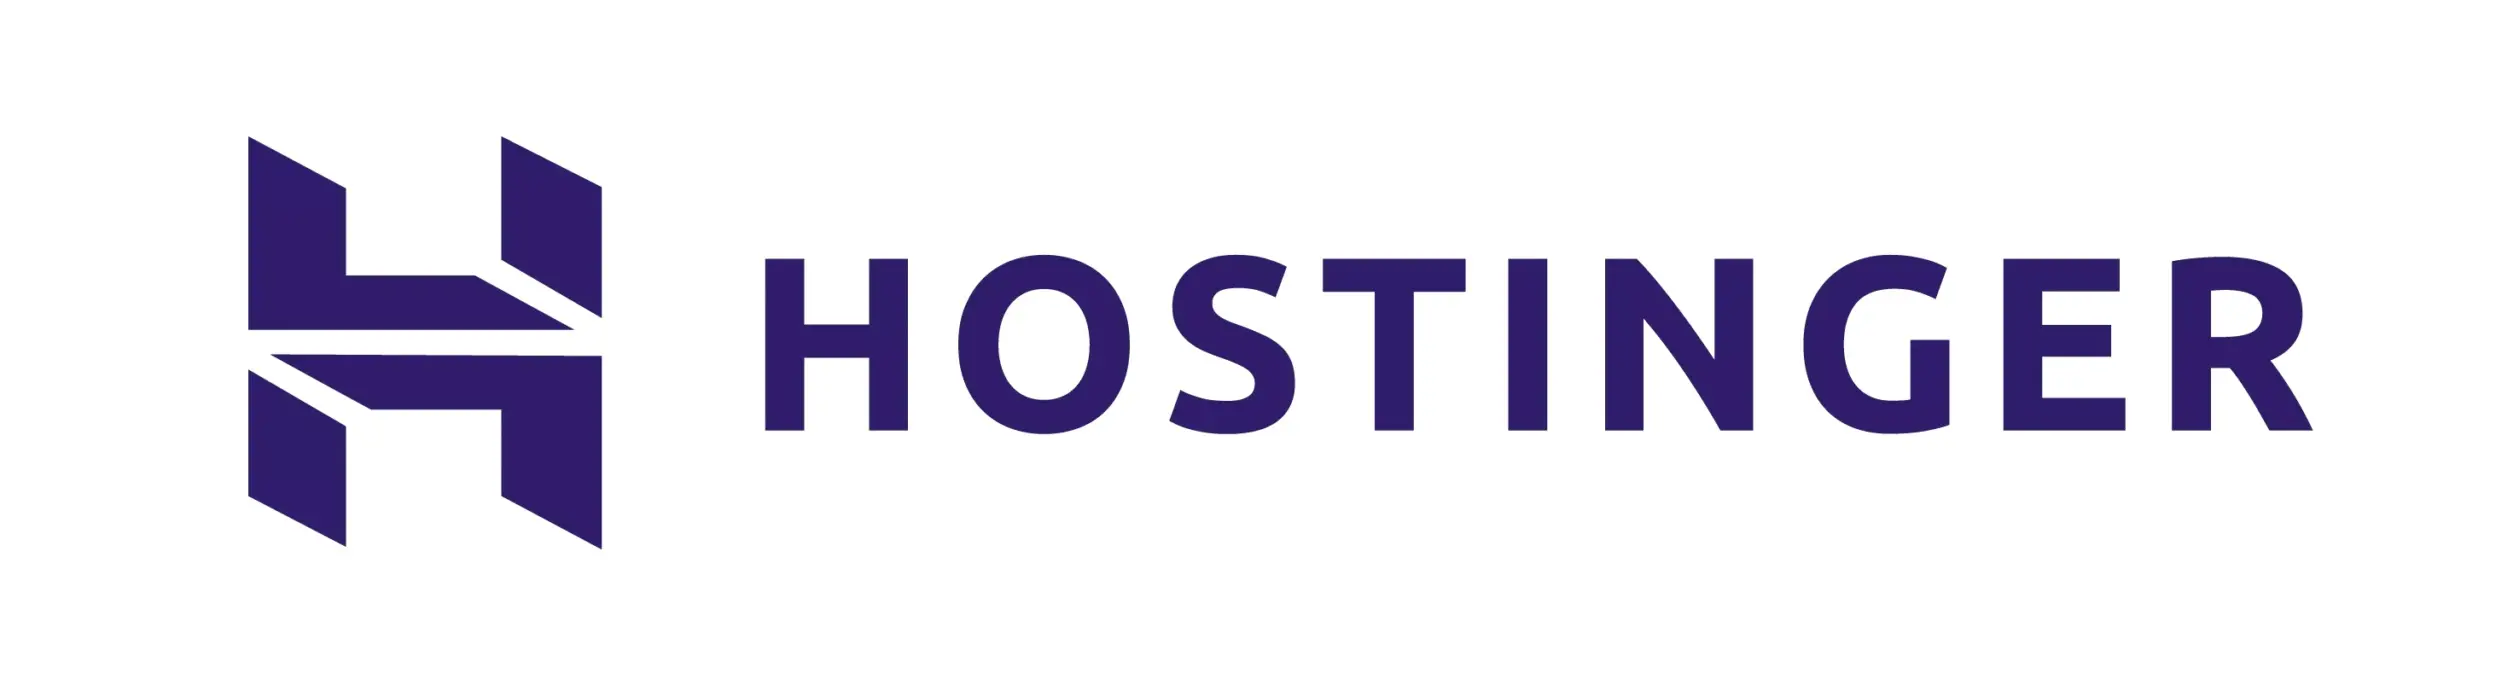 Hostinger Logo - top 10 web hosting provider